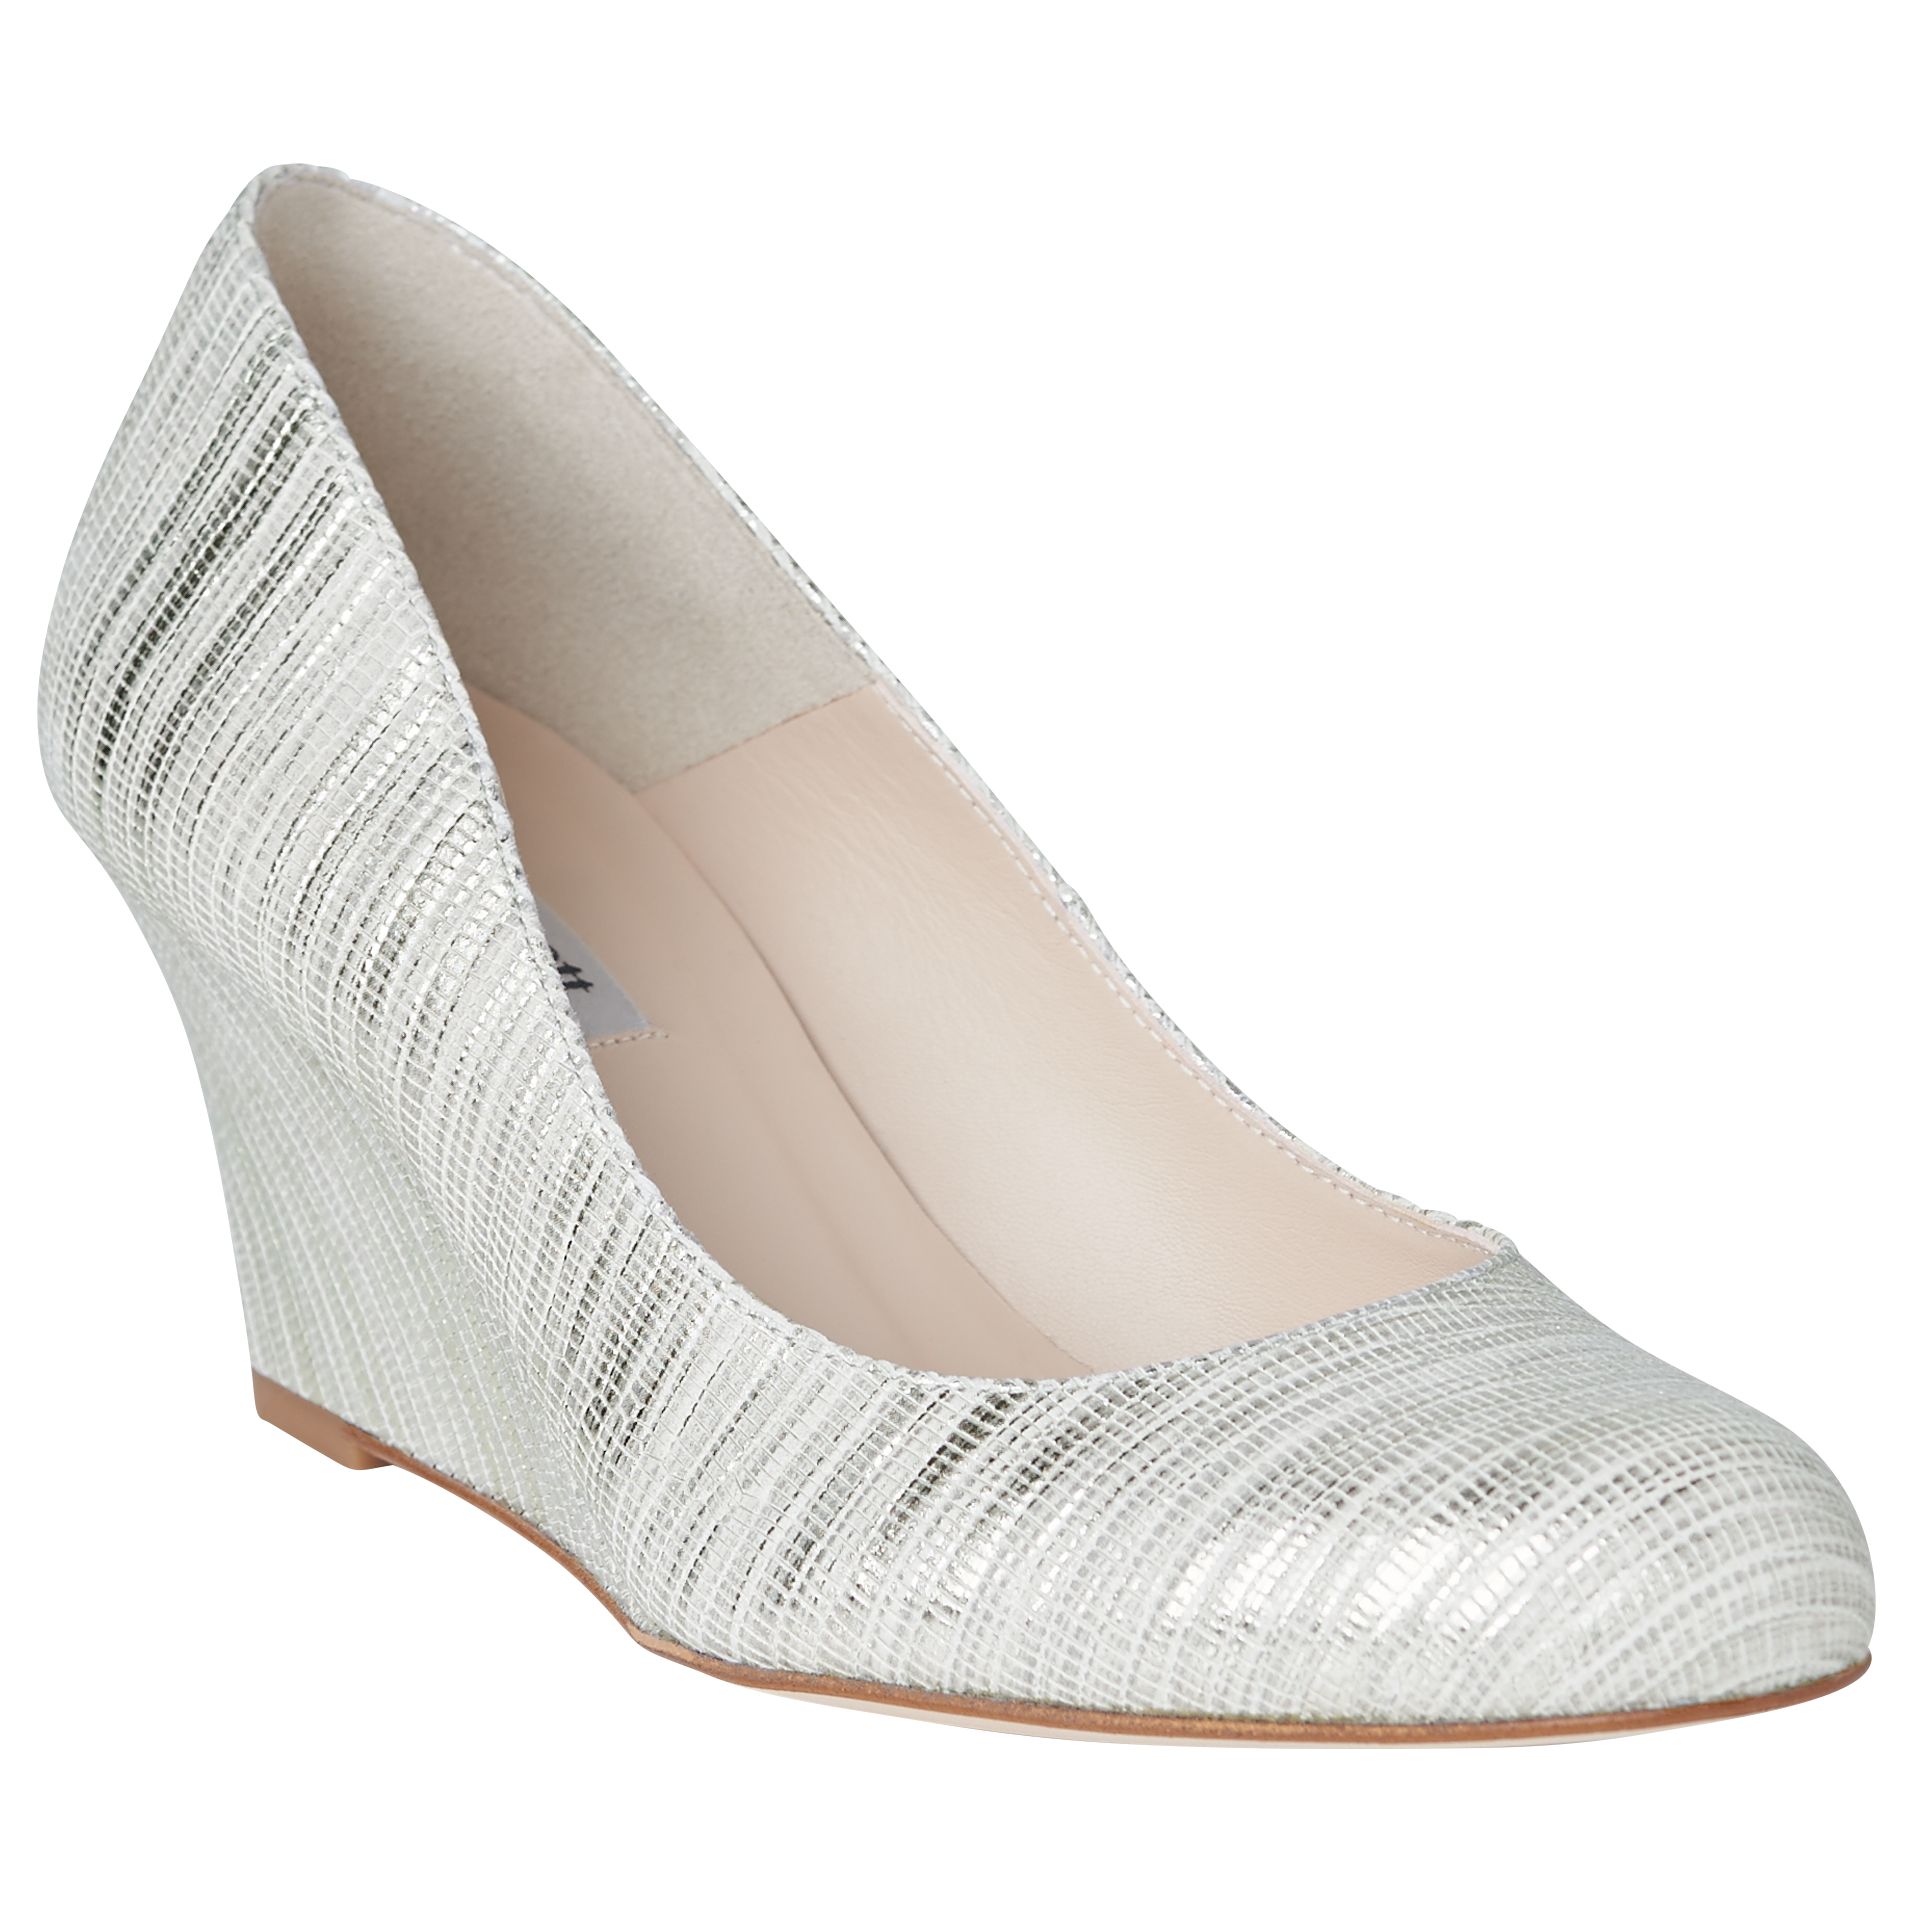 L.K. Bennett Zahara Wedge Heeled Court Shoes, Metallic Cream, 7.5